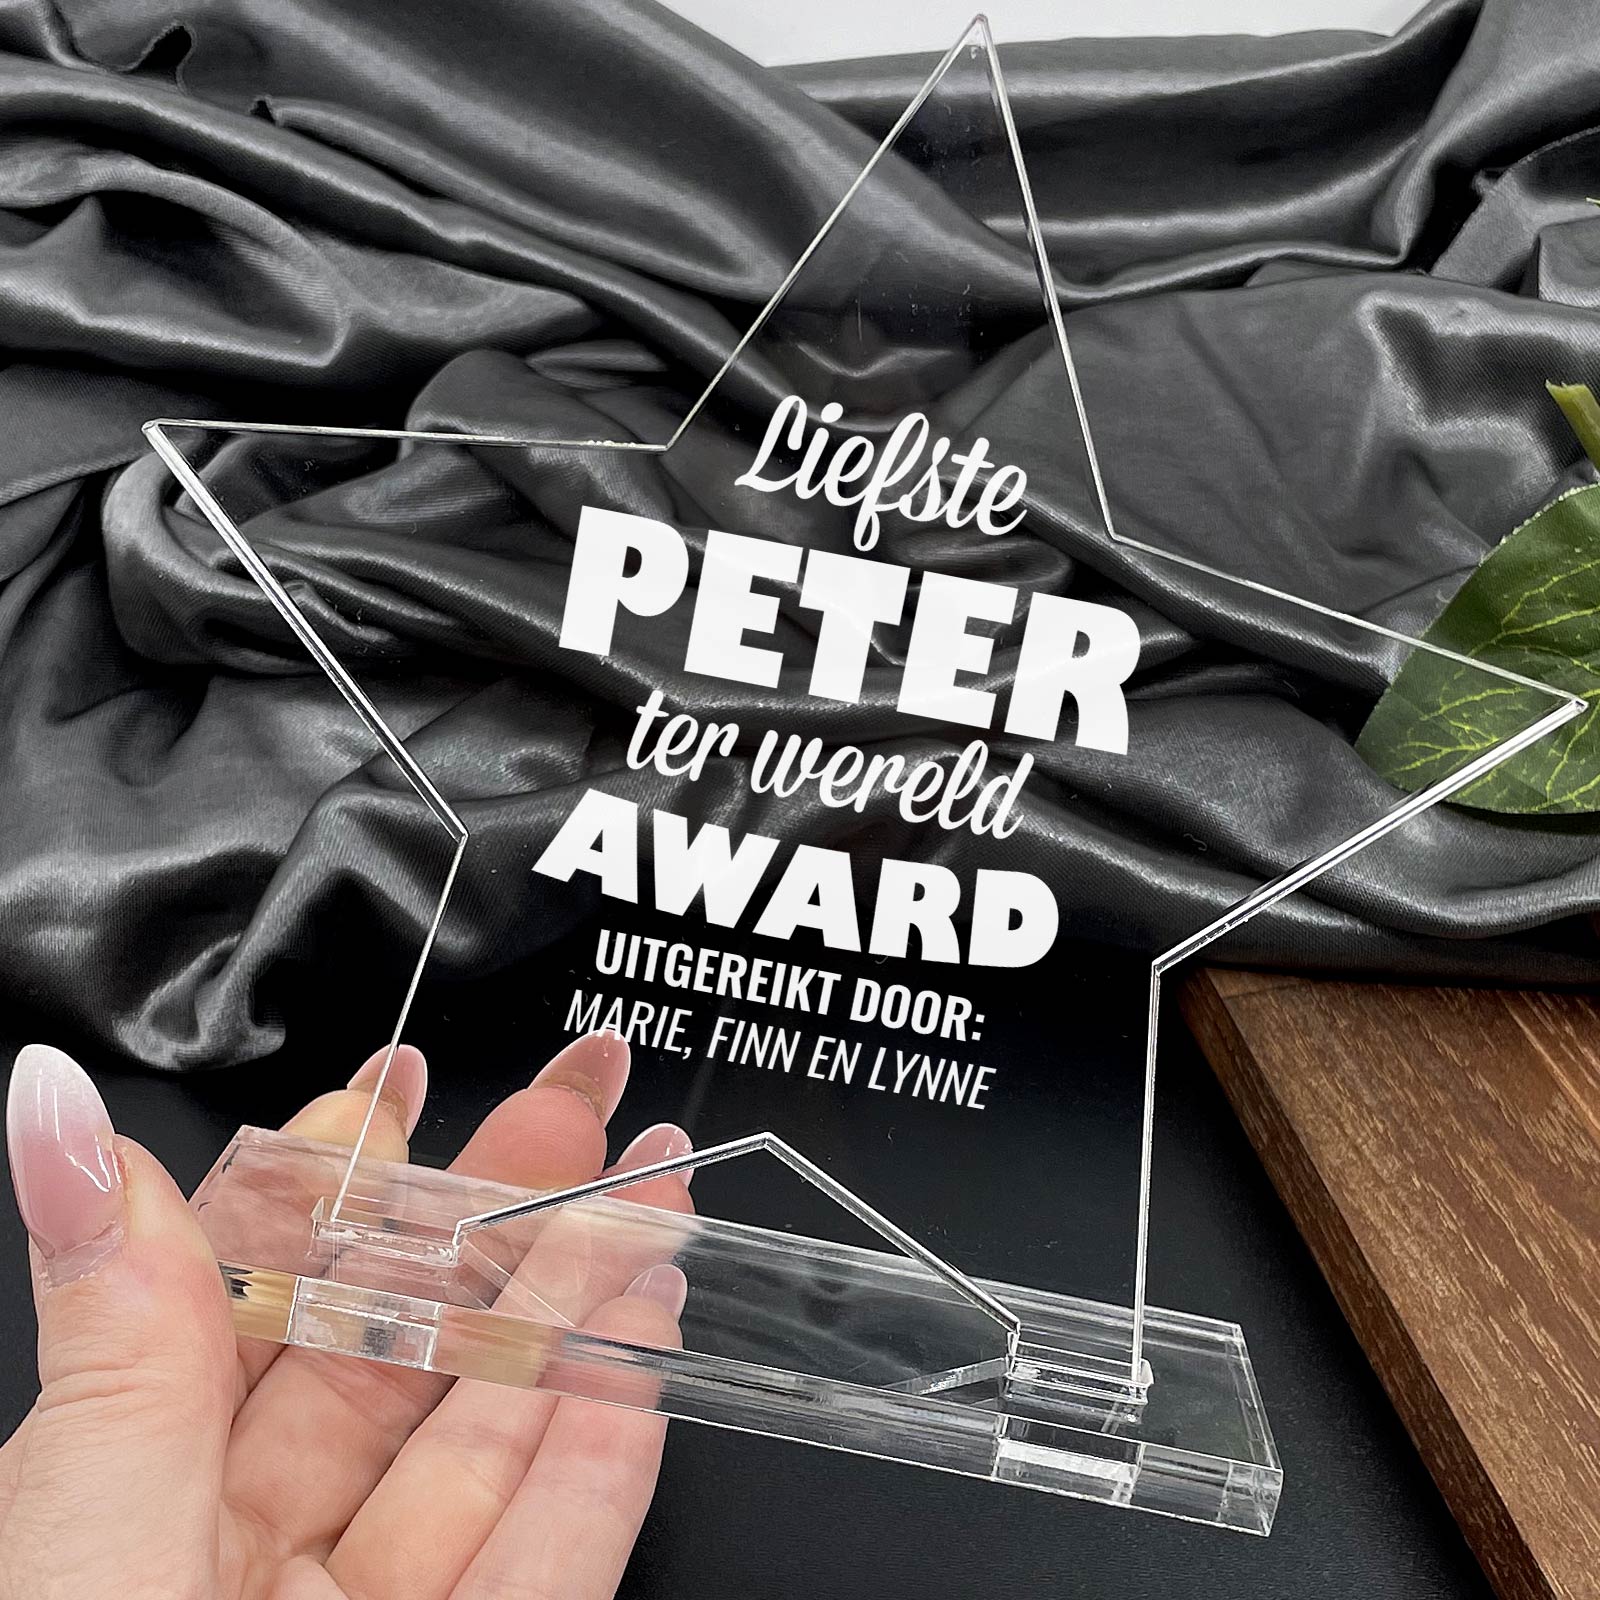 Liefste Peter Ter Wereld Award - Bella Mia